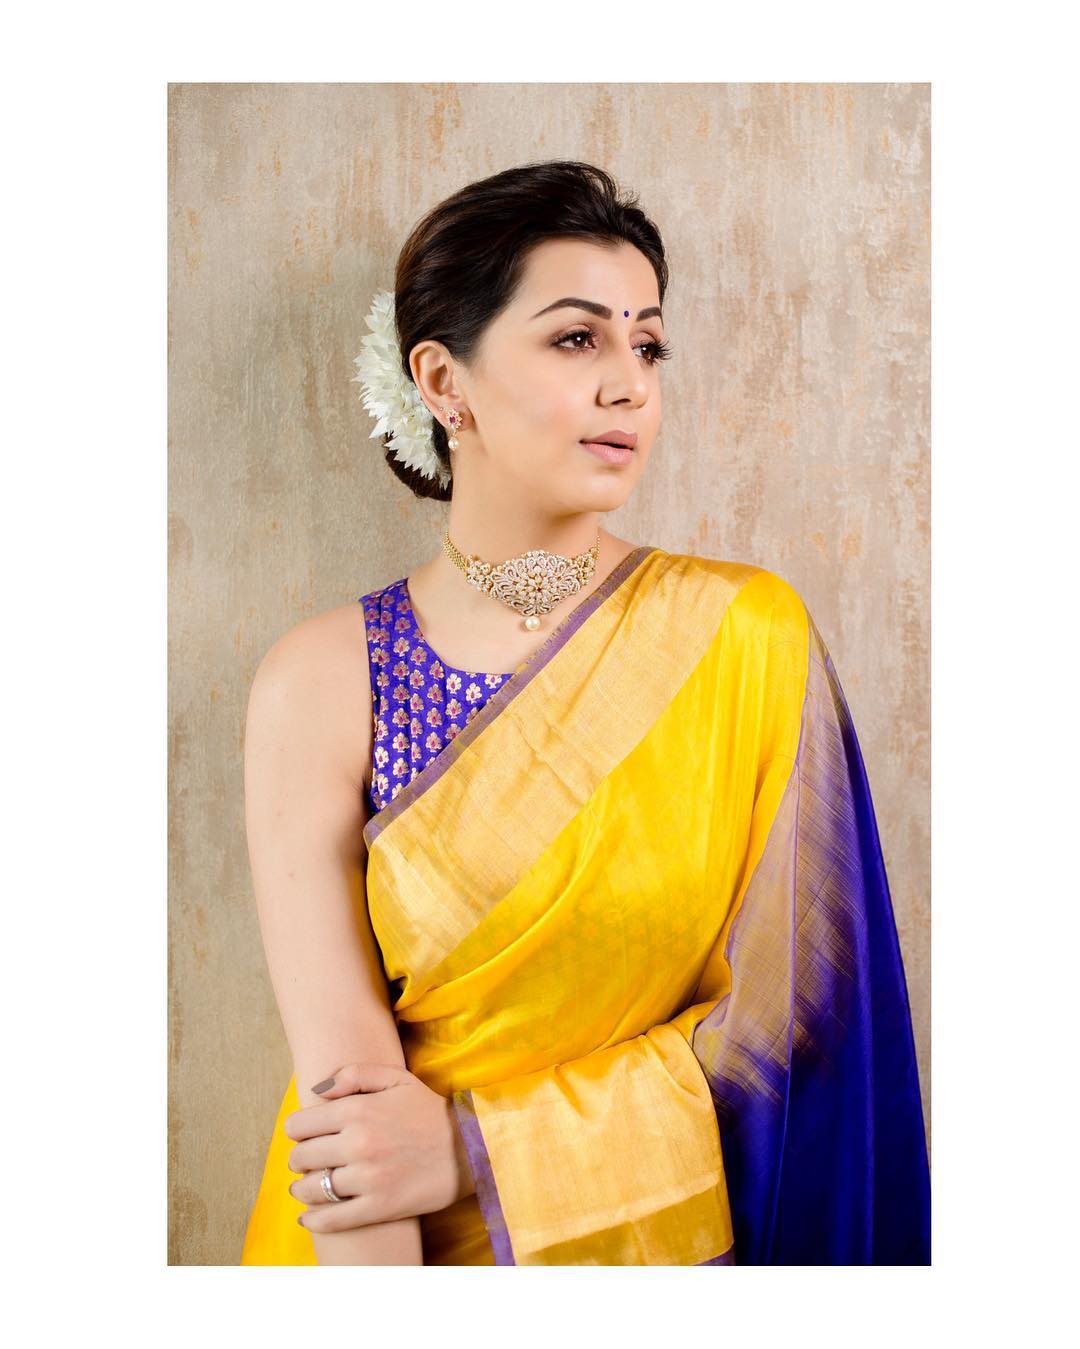 Celebrity Styles to Steal, Uppada pattu plain with long border, Nikki Galrani sarees, sarees for women in uk